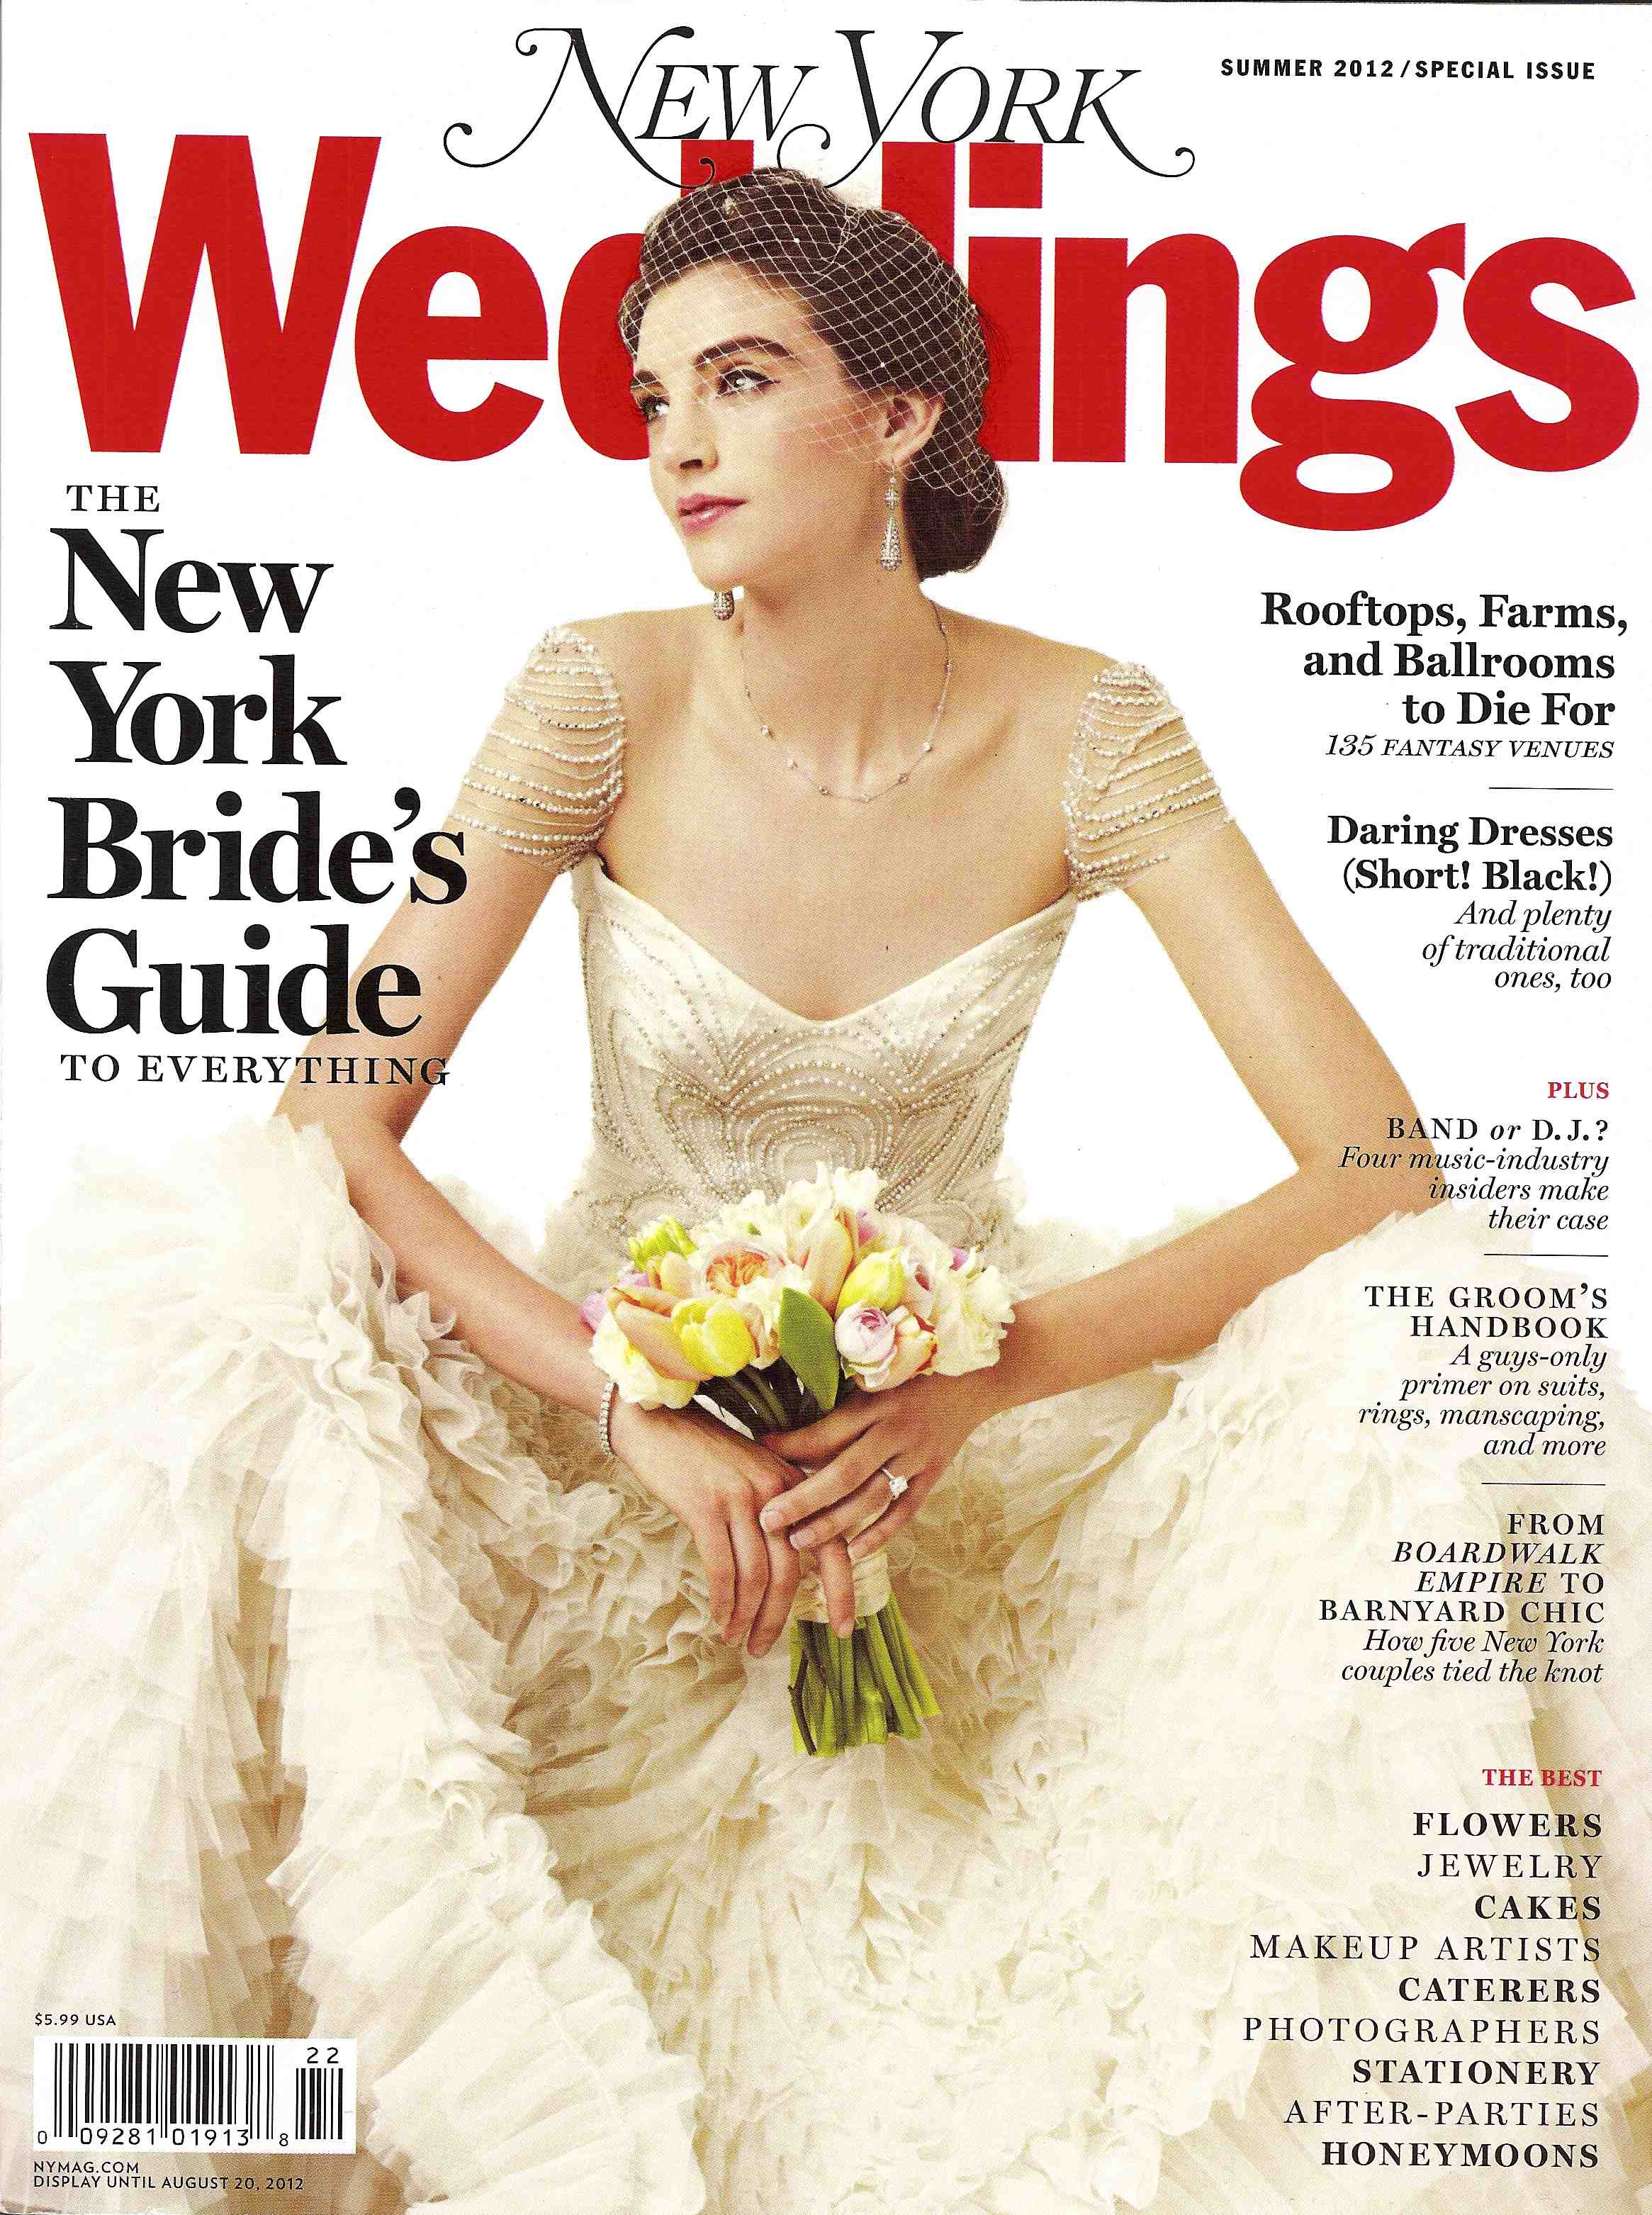 New York Weddings Cover 2012-1.jpg